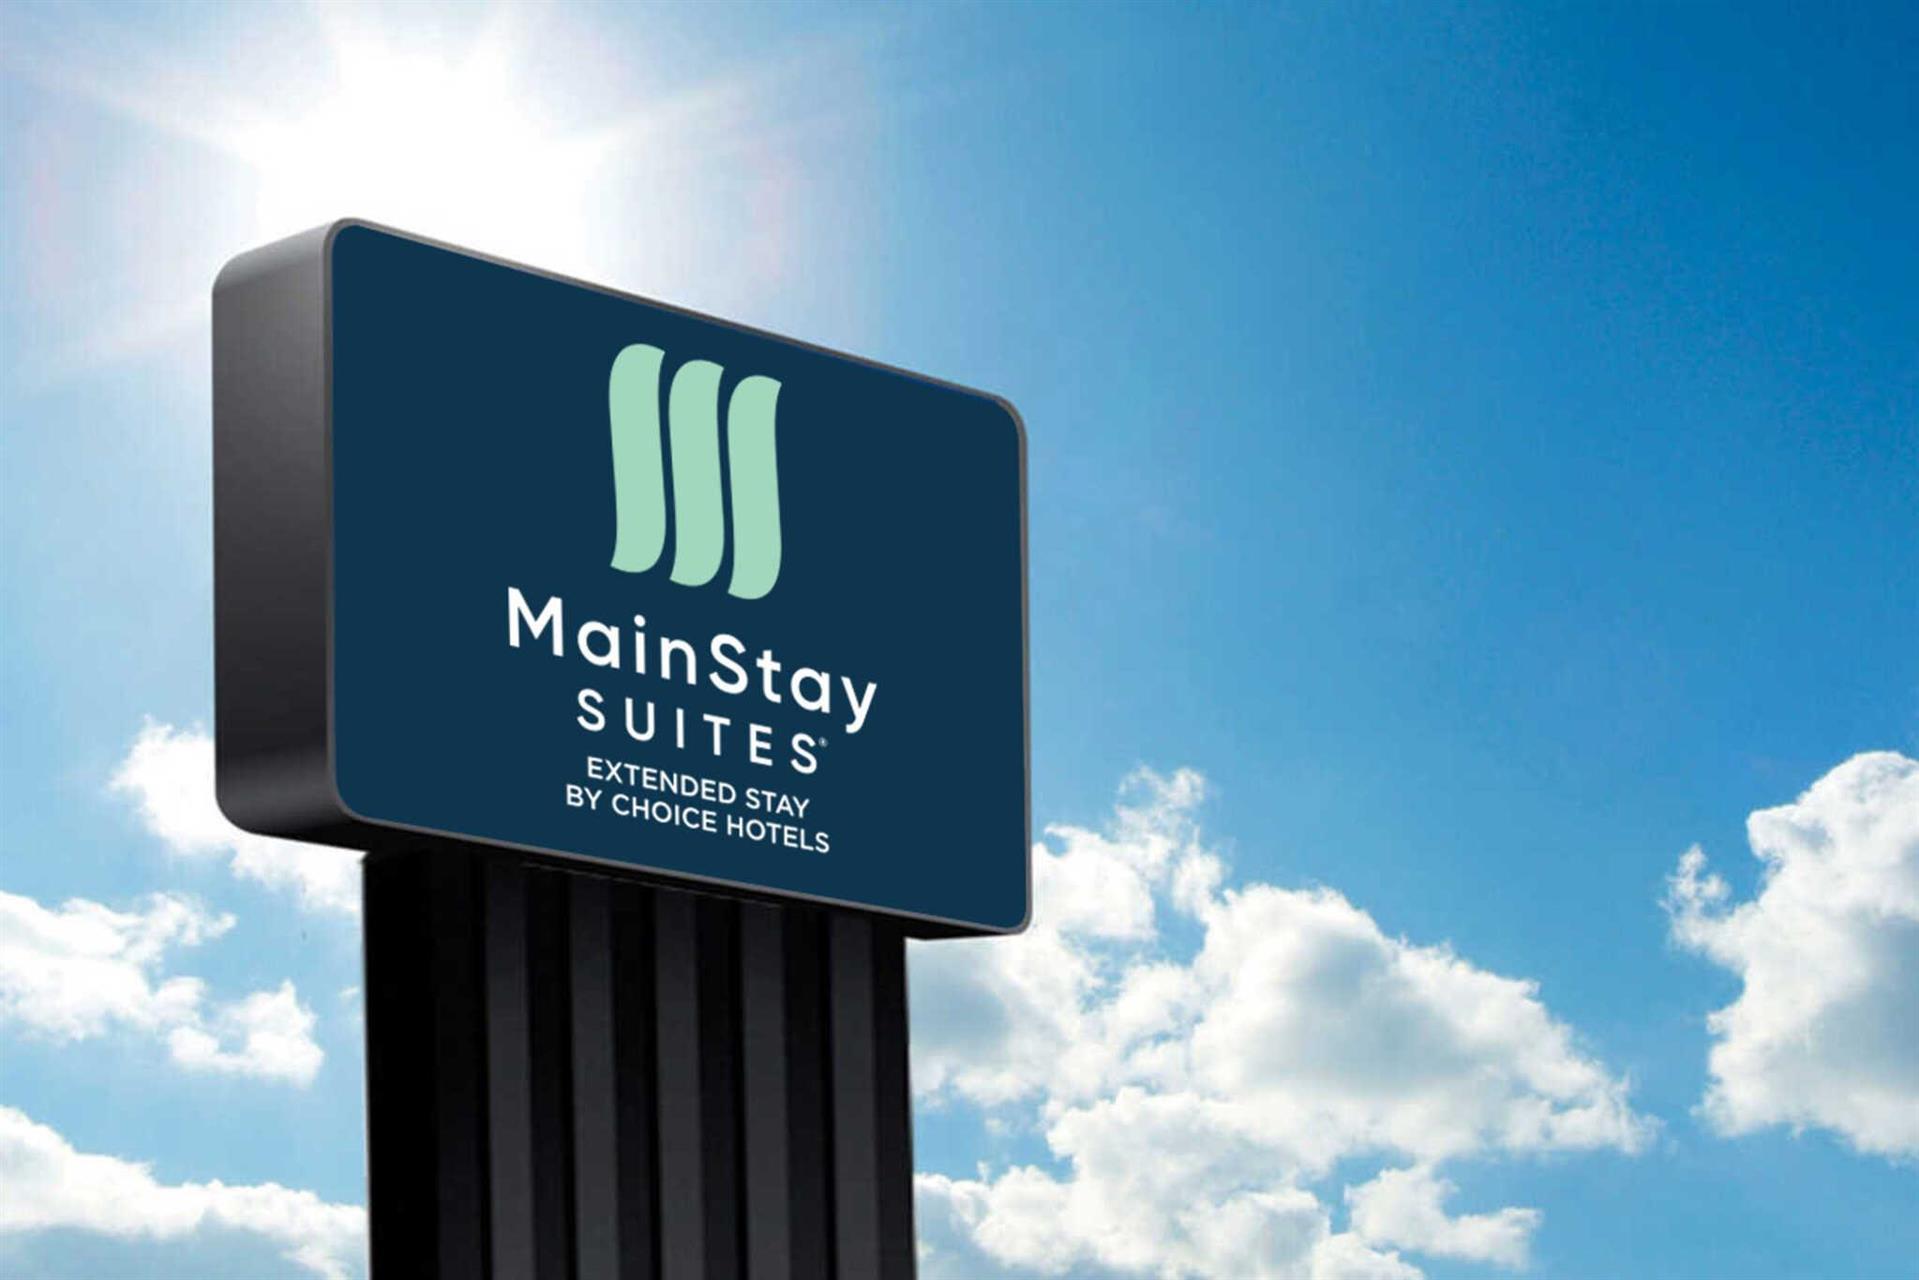 MainStay Suites Foxboro - Mansfield in Attleboro, MA